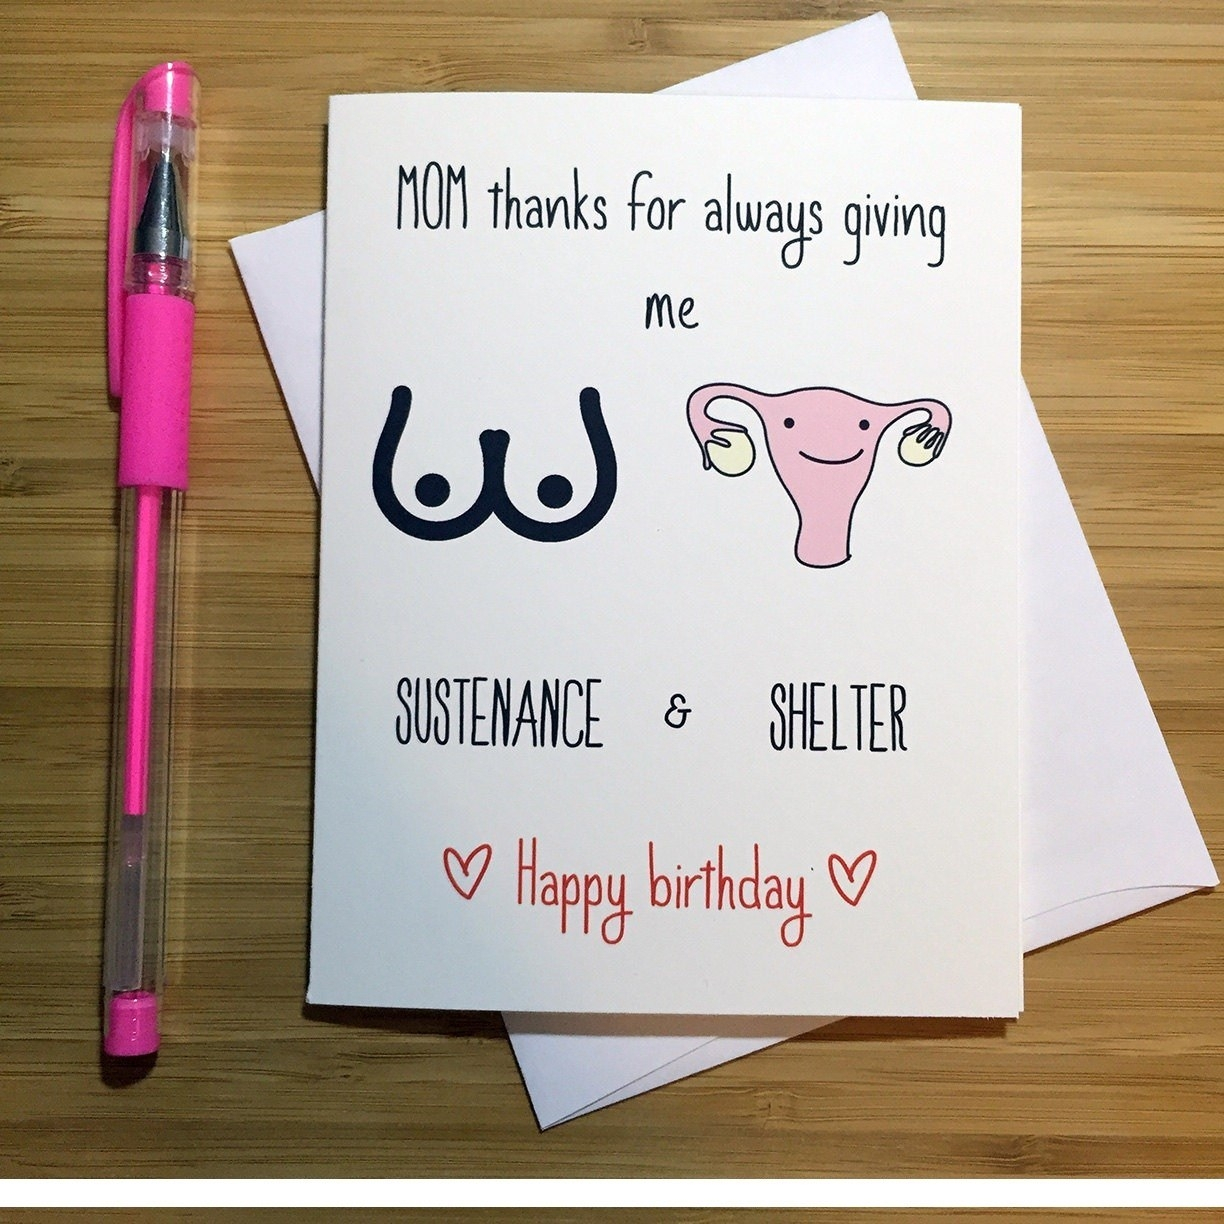 Handmade Birthday Card Ideas For Daughter 97 Homemade Birthday Gifts For Mom 17 Diy Gift Ideas For Your Mom